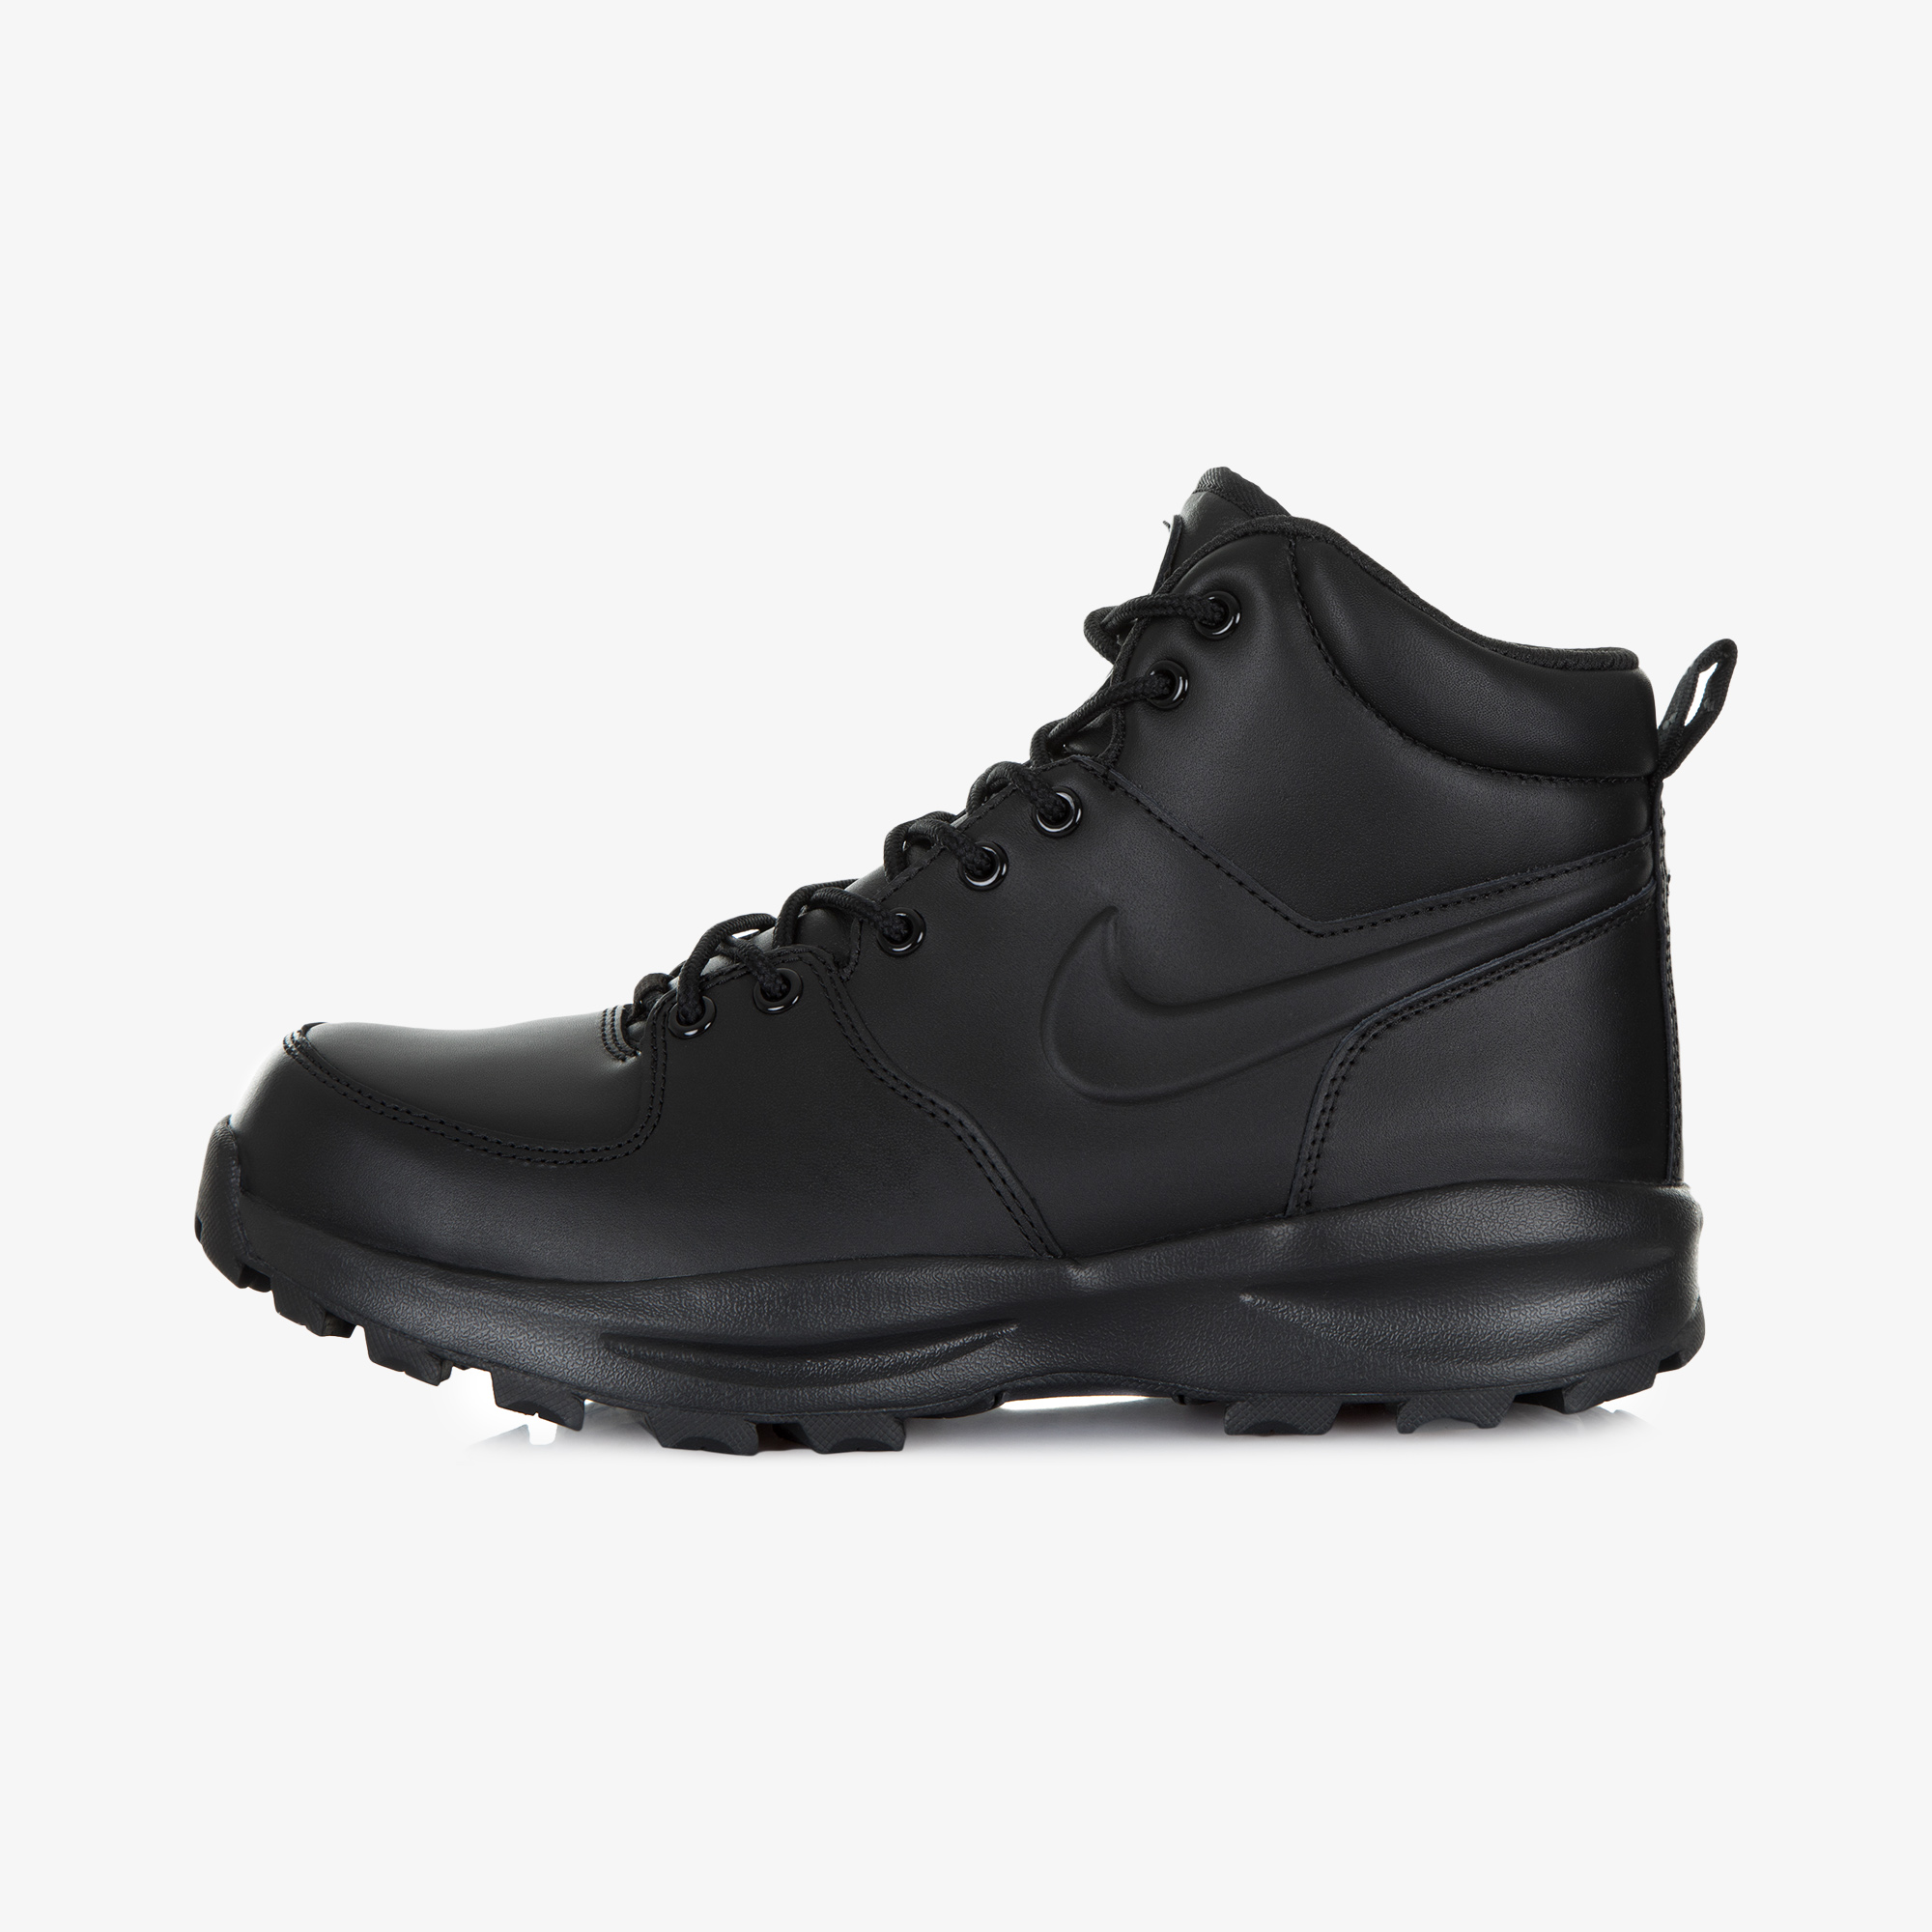 Ботинки Nike Nike Manoa Leather 454350-N06-003, размер Да, цвет черный 454350-003 - фото 1